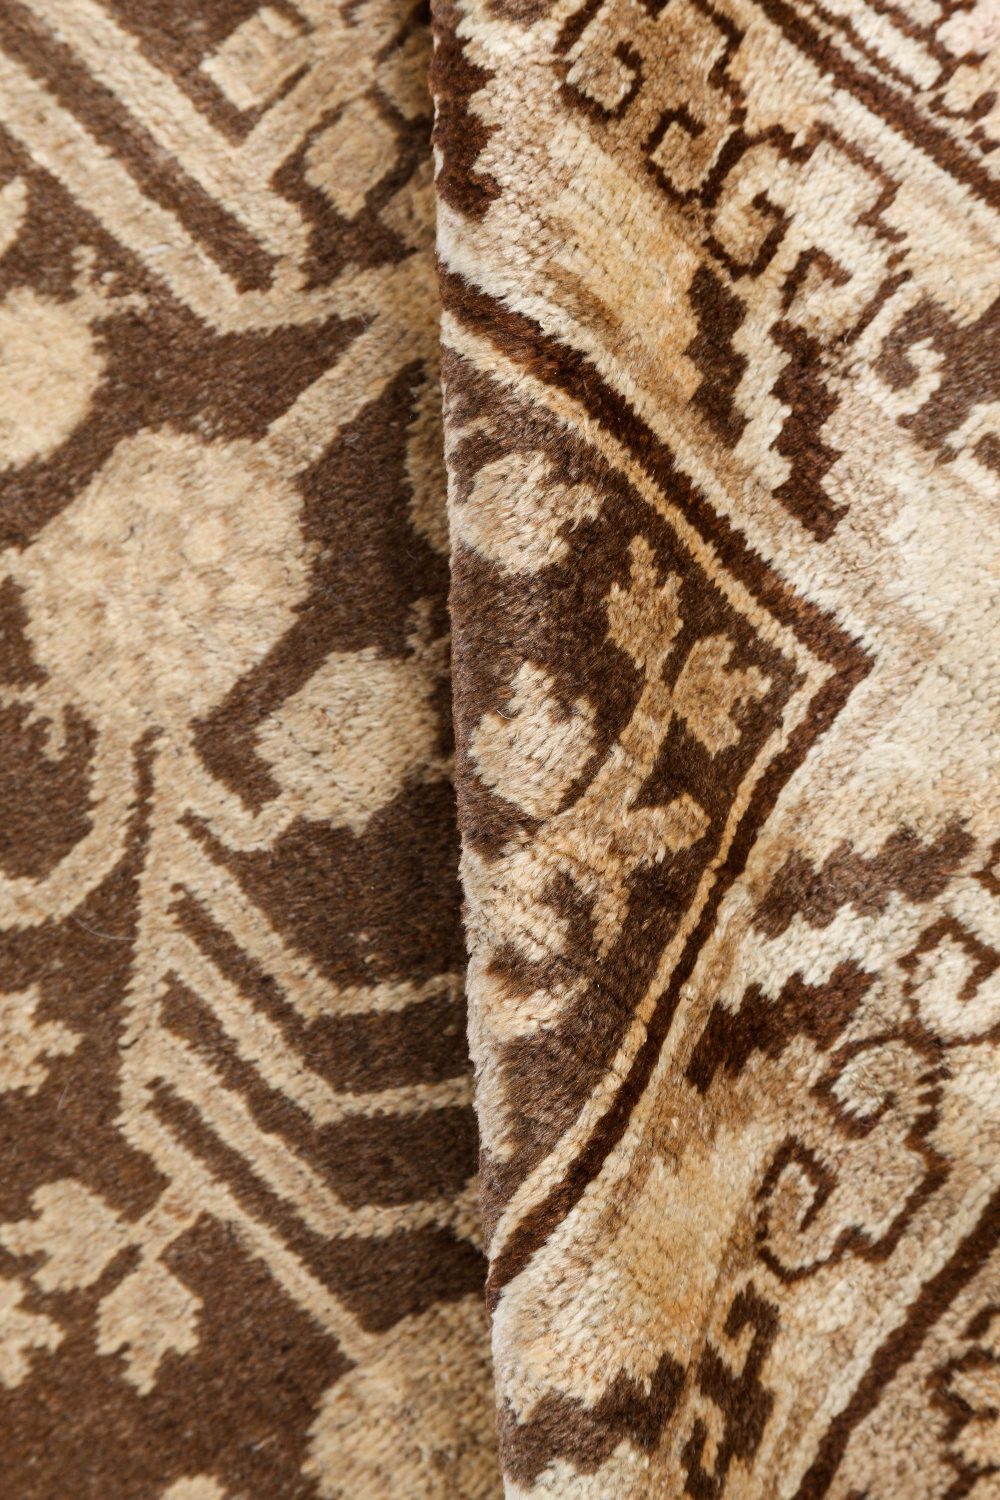 Vintage Samarkand (Khotan) Botanic Handmade Wool Rug in Brown and Beige BB7443